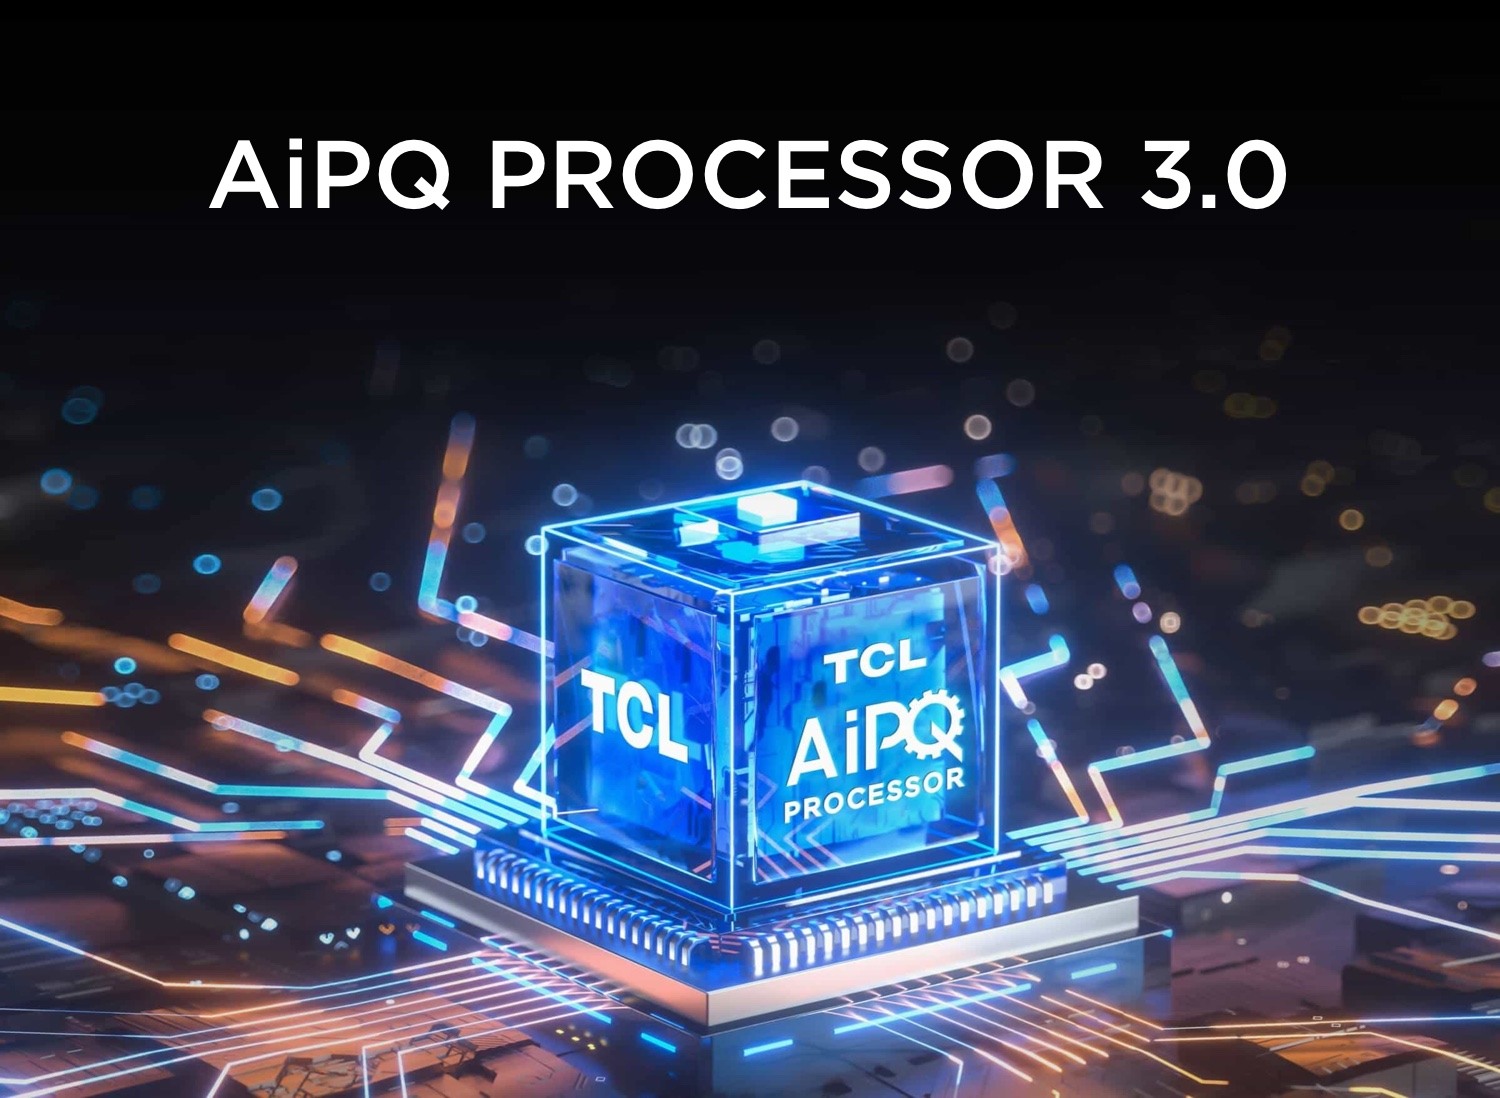 AiPQ Processor 3.0